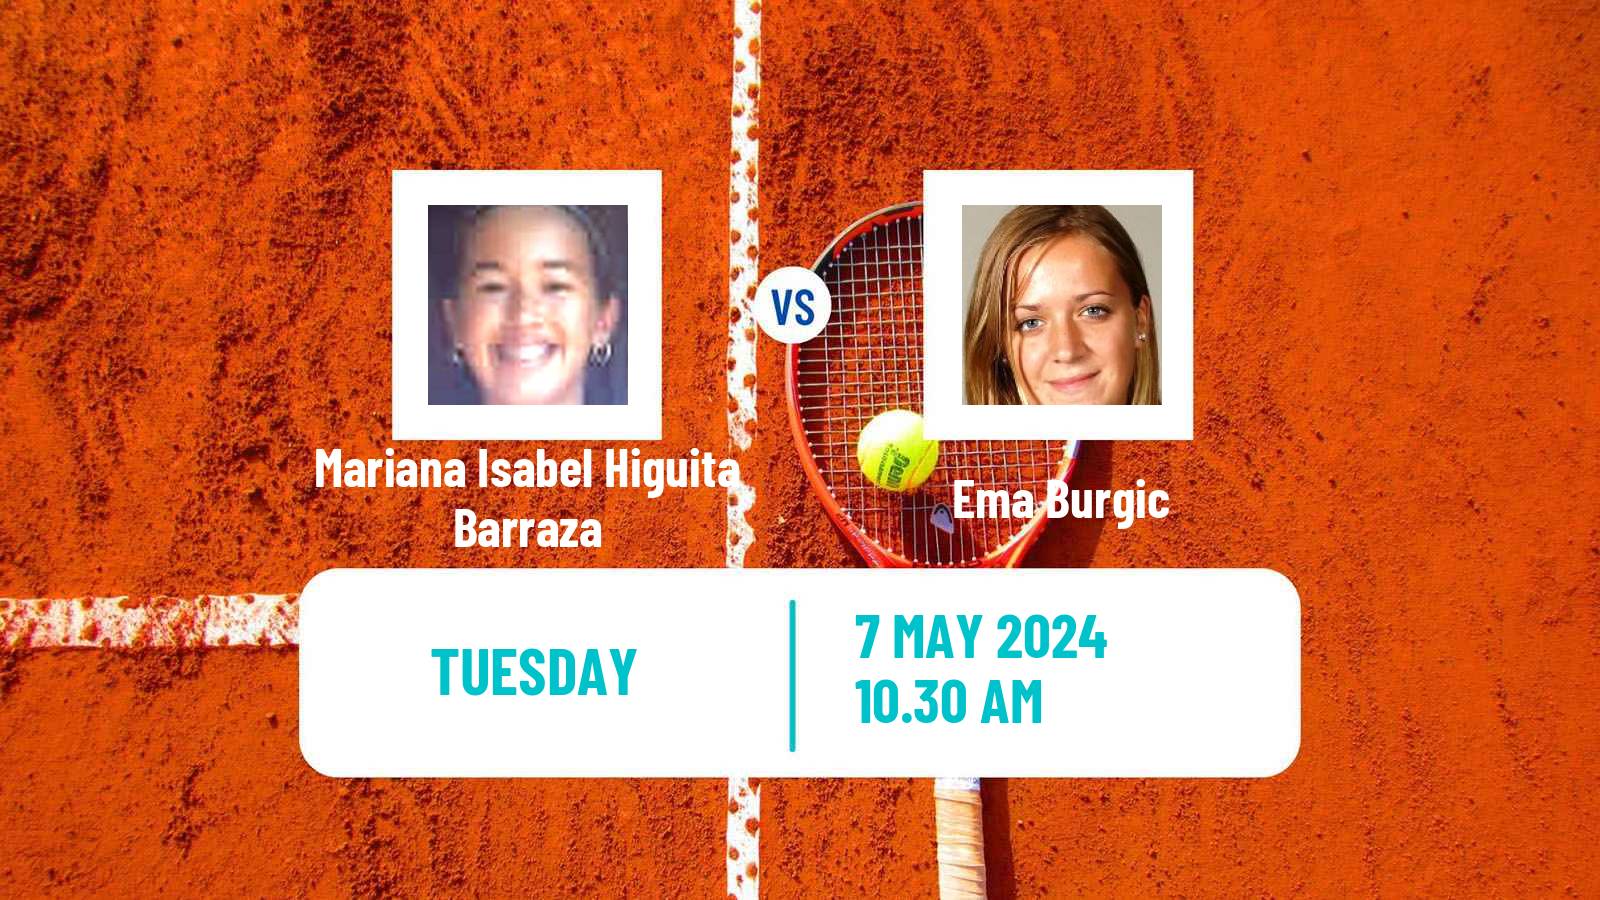 Tennis ITF W35 Sopo Women Mariana Isabel Higuita Barraza - Ema Burgic